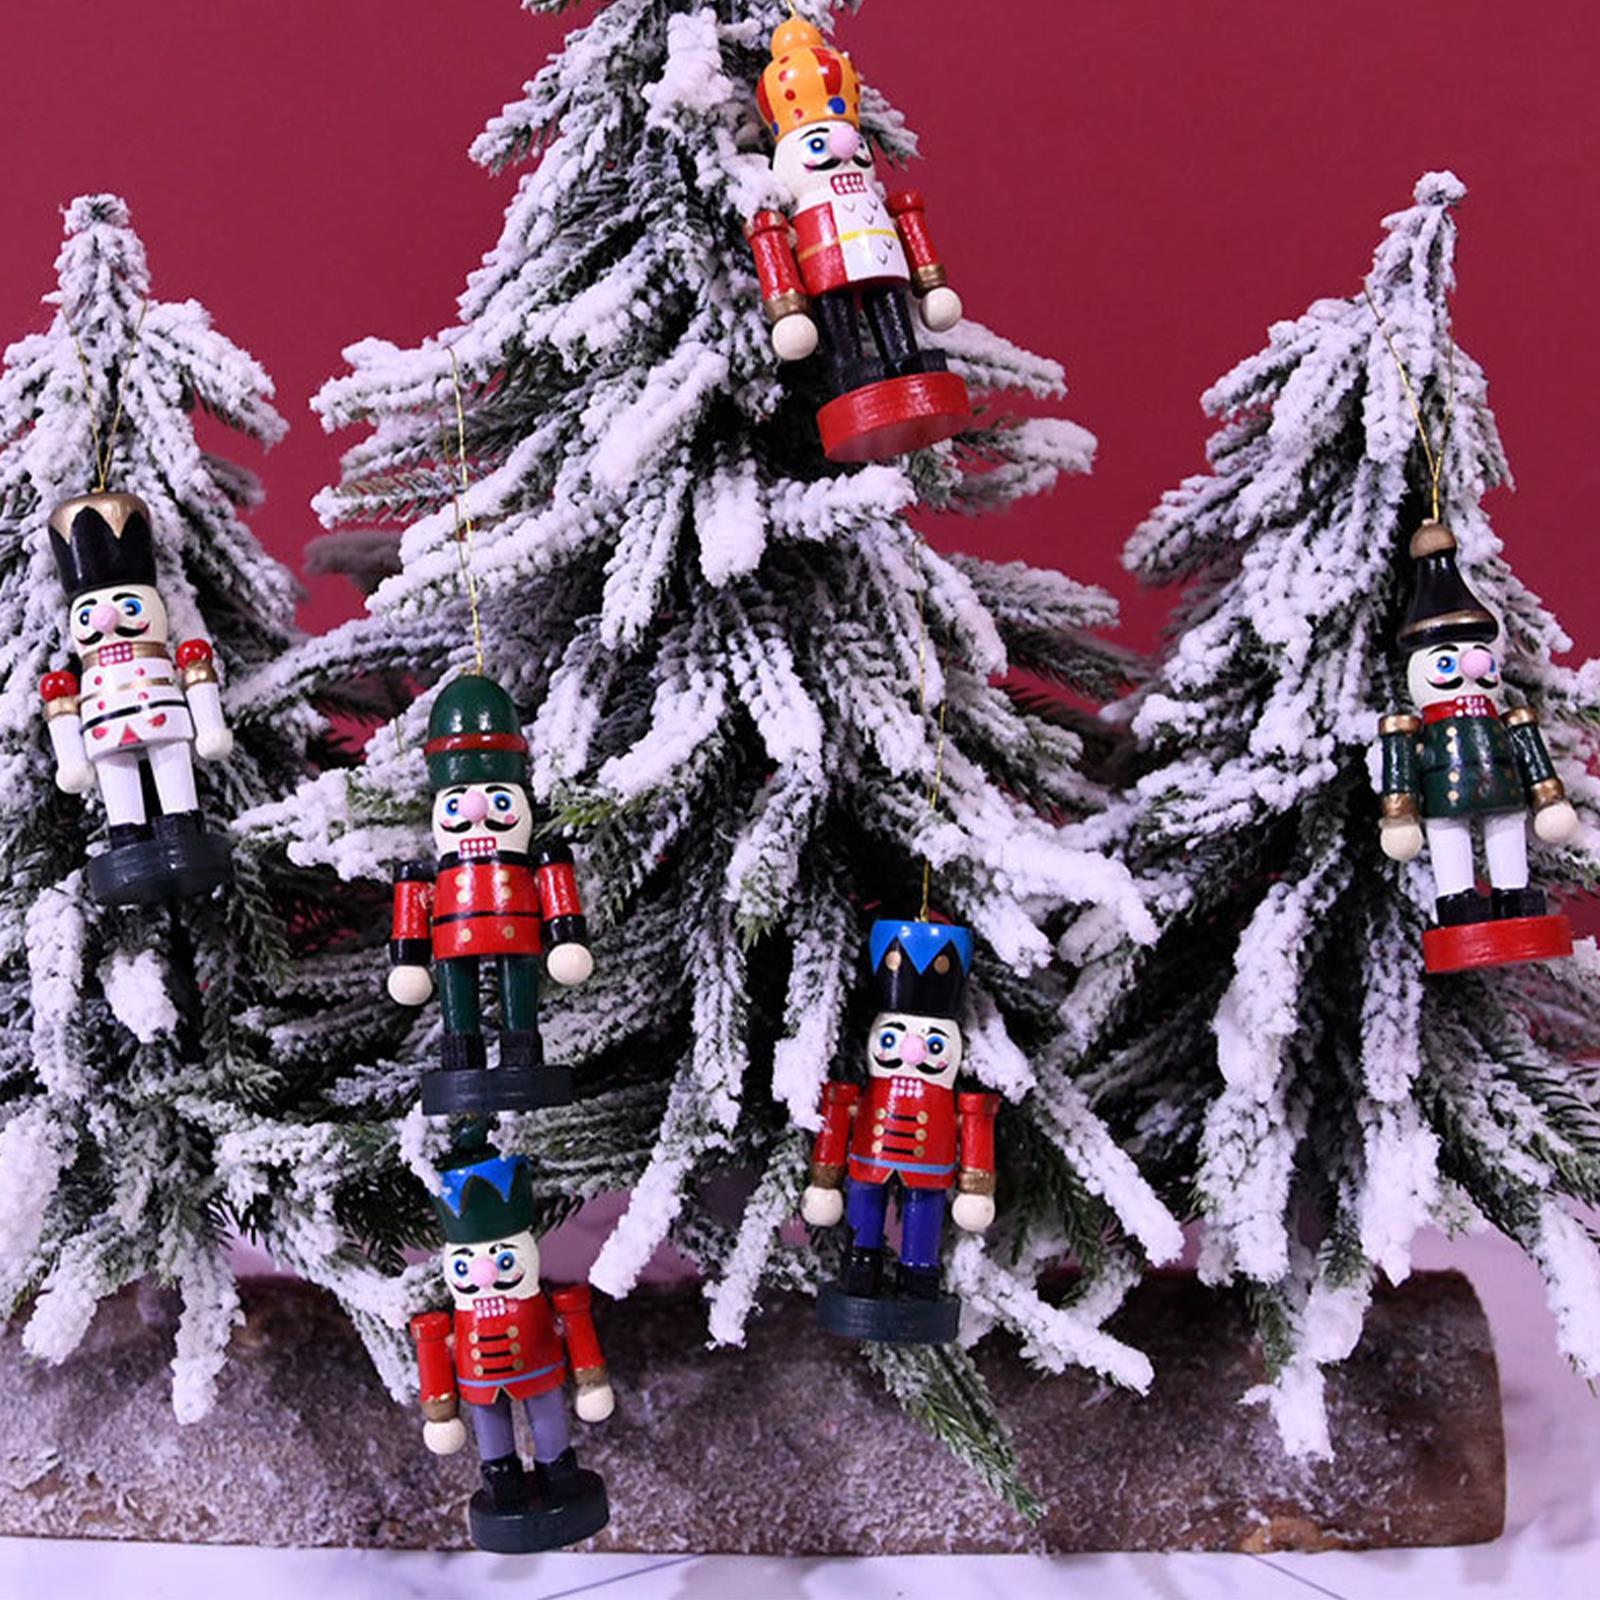 6 Pieces Nutcracker Figures Decorative Nutcracker Soldier for Ornaments